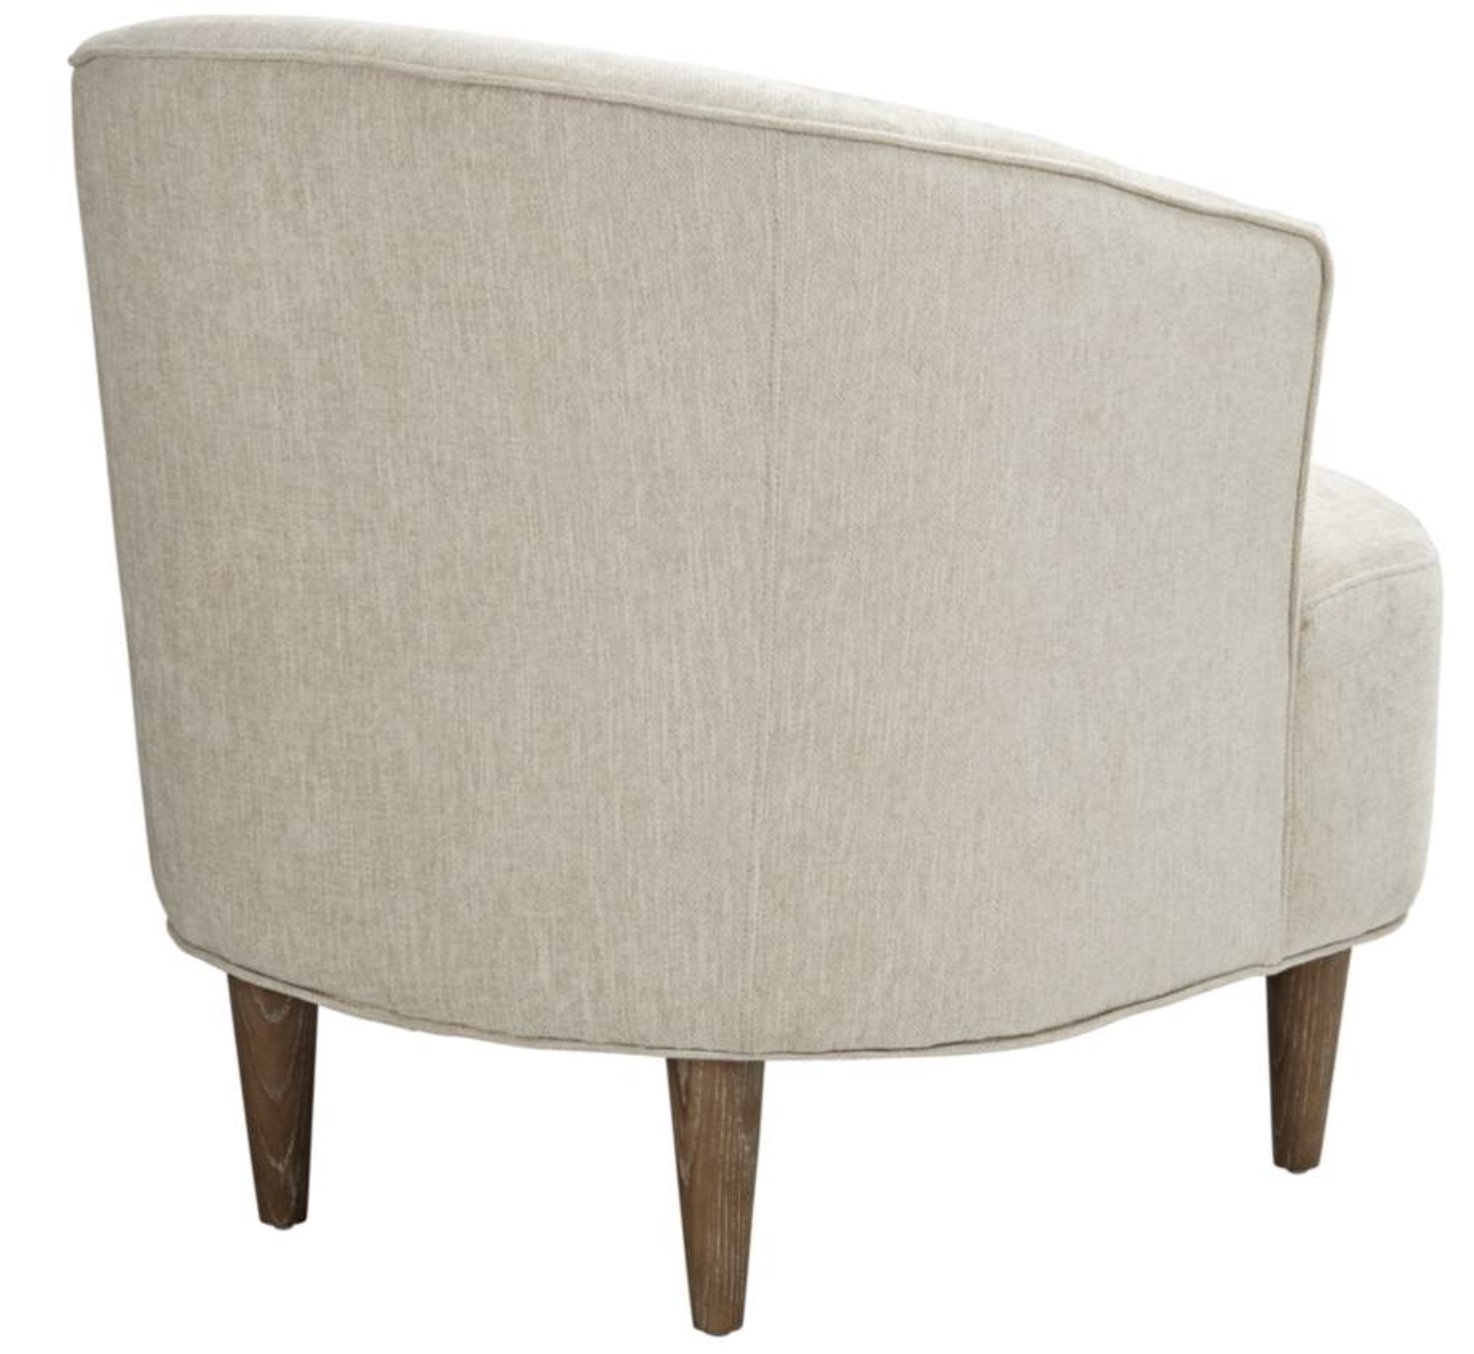 Herringbone Beige Fabric Accent Chair - Style # 79D20 - Image 2